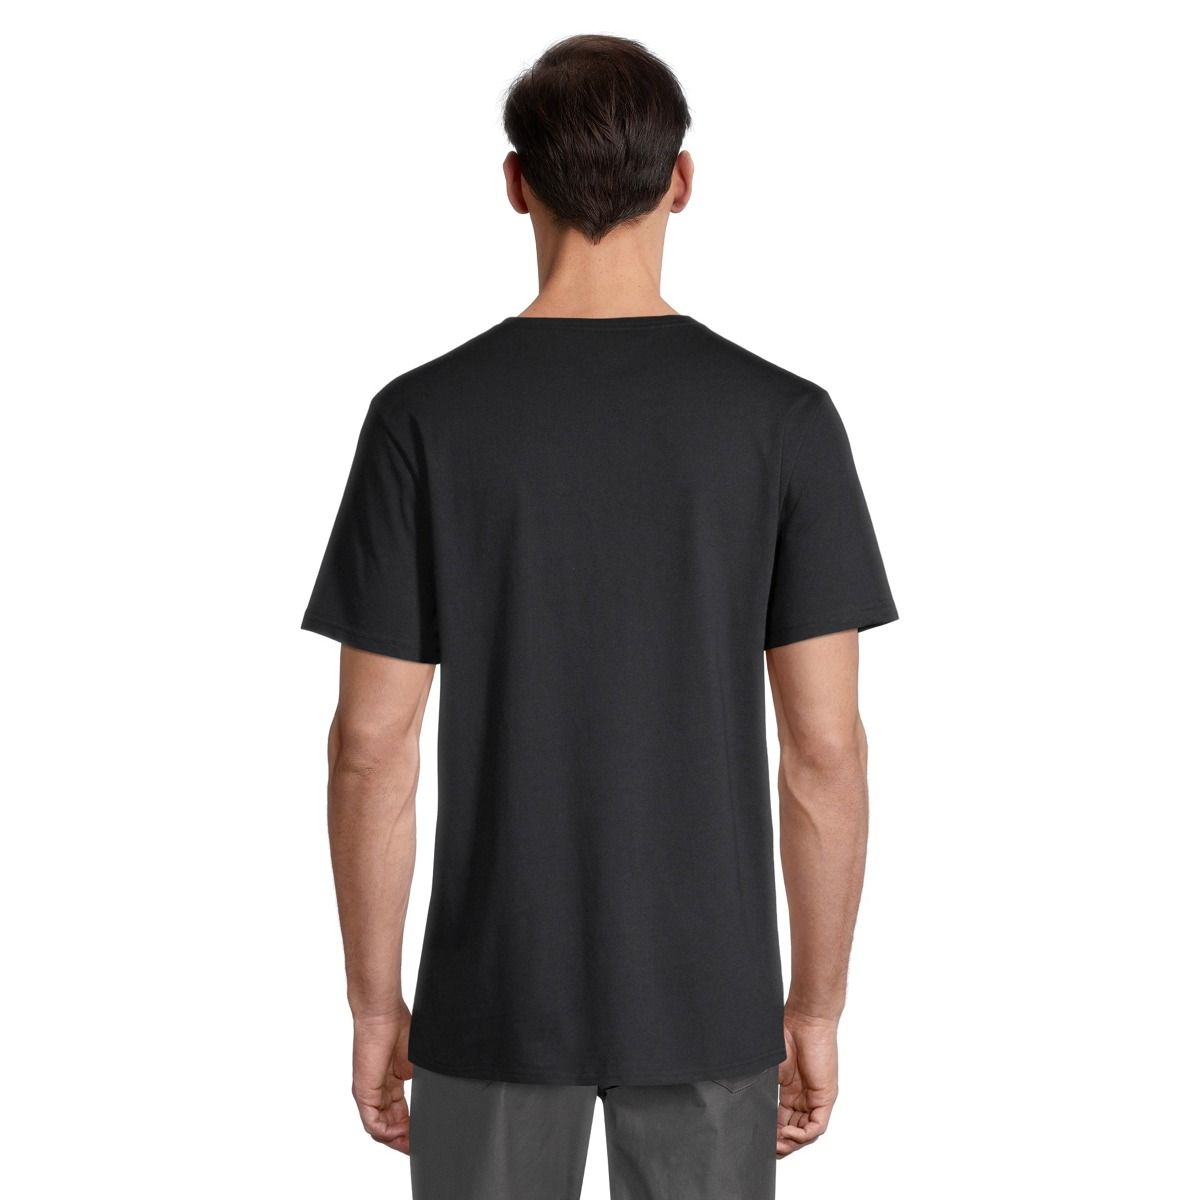 CMP MAN T-shirt Seamless - Men's T-shirt for any outdoor